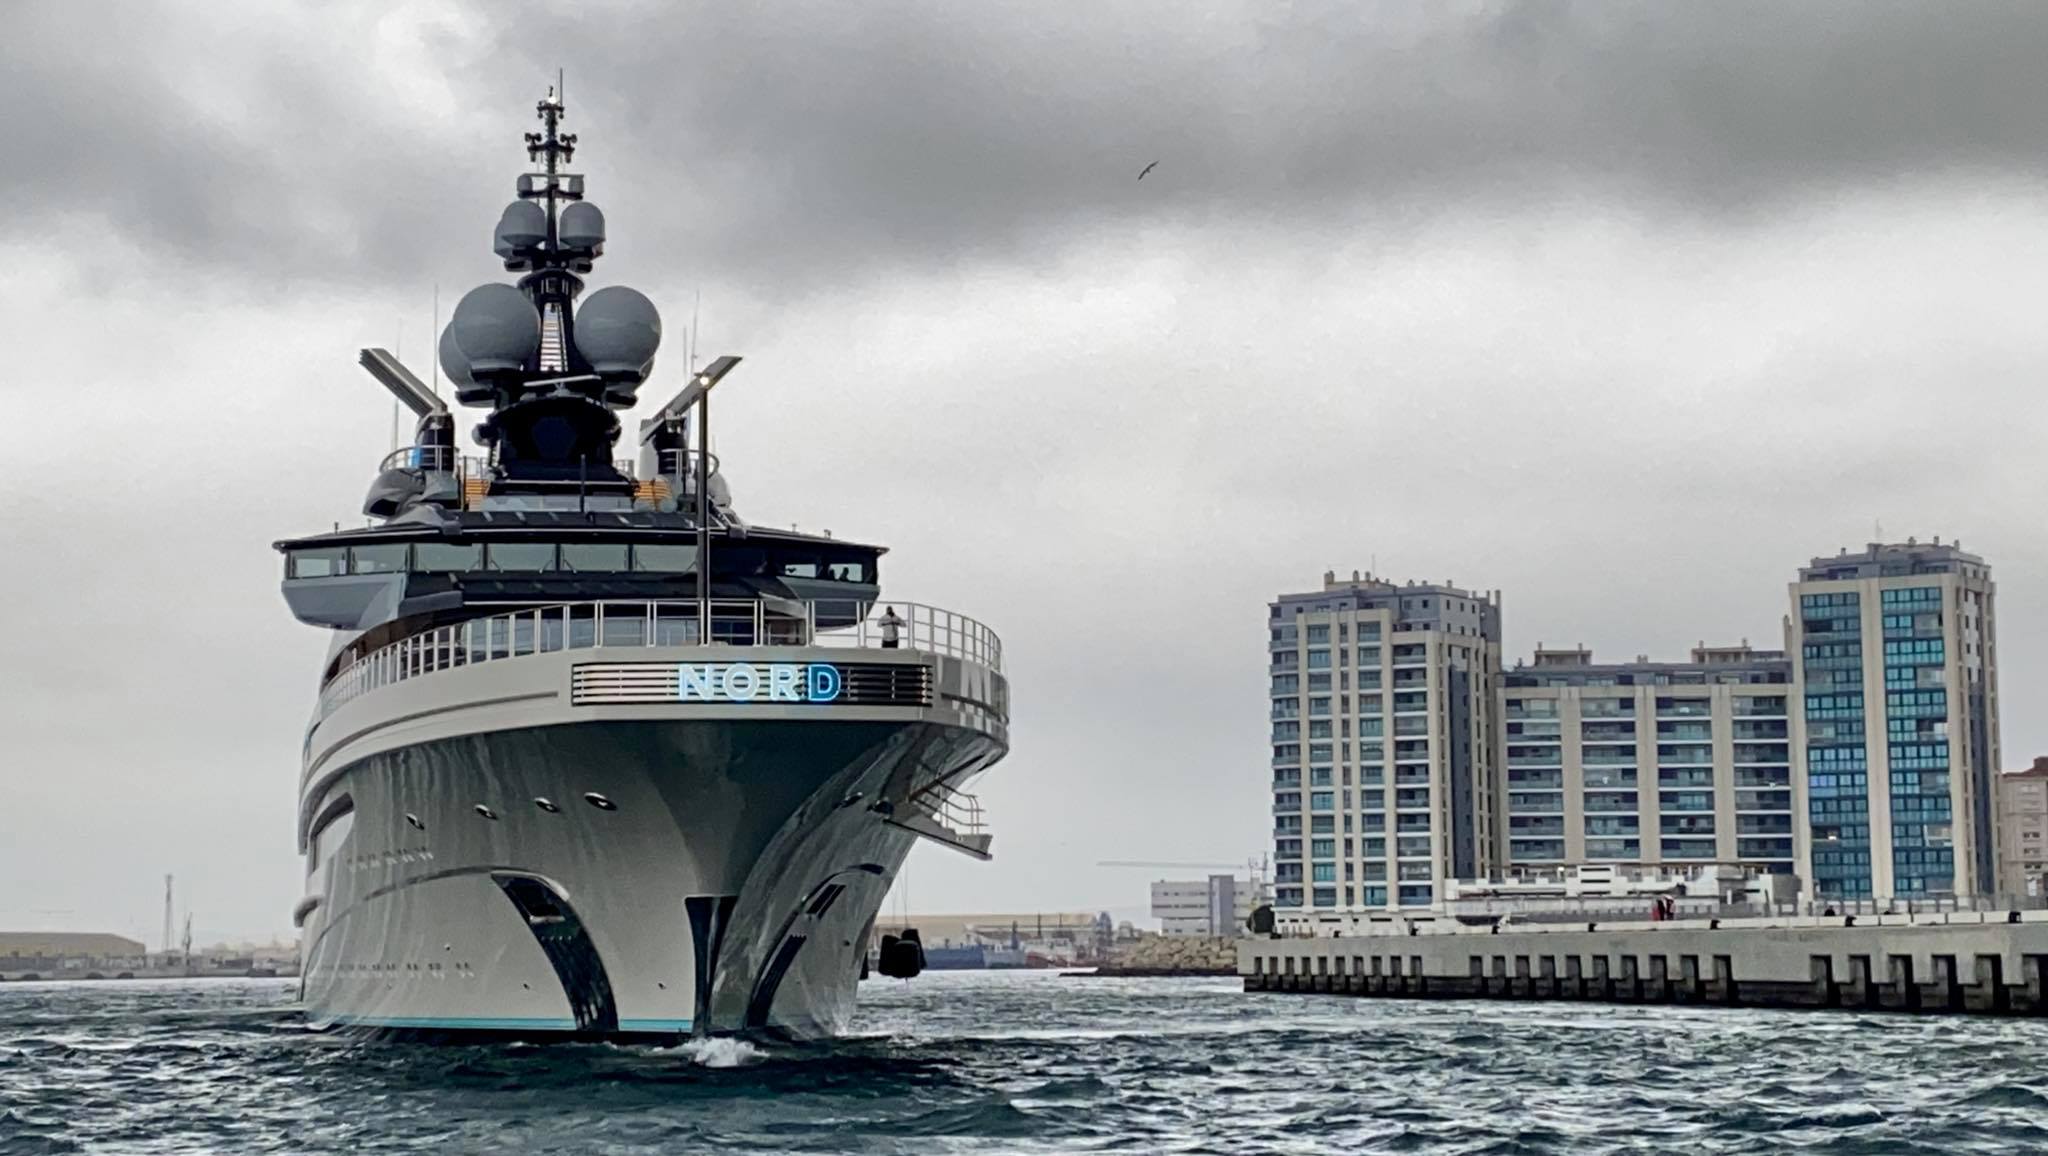 yacht NORD – Lurssen – 2021 – Alexei Mordashov